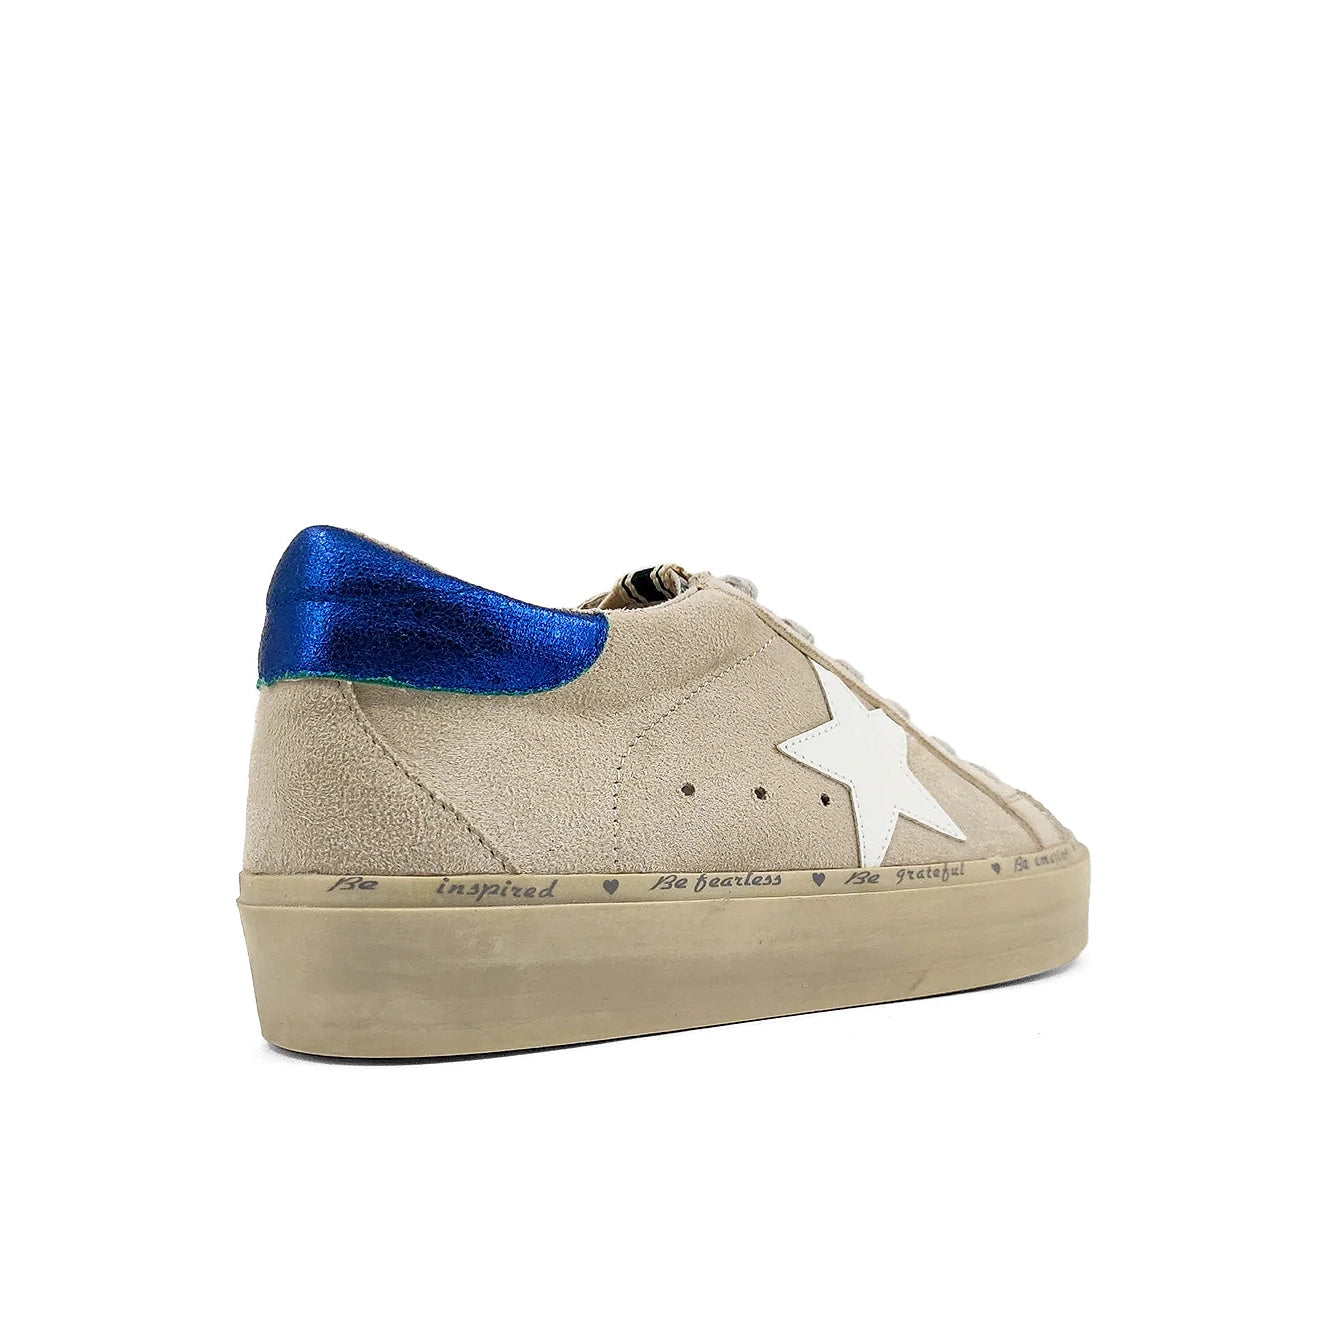 Reba Sneakers in Blue/Taupe